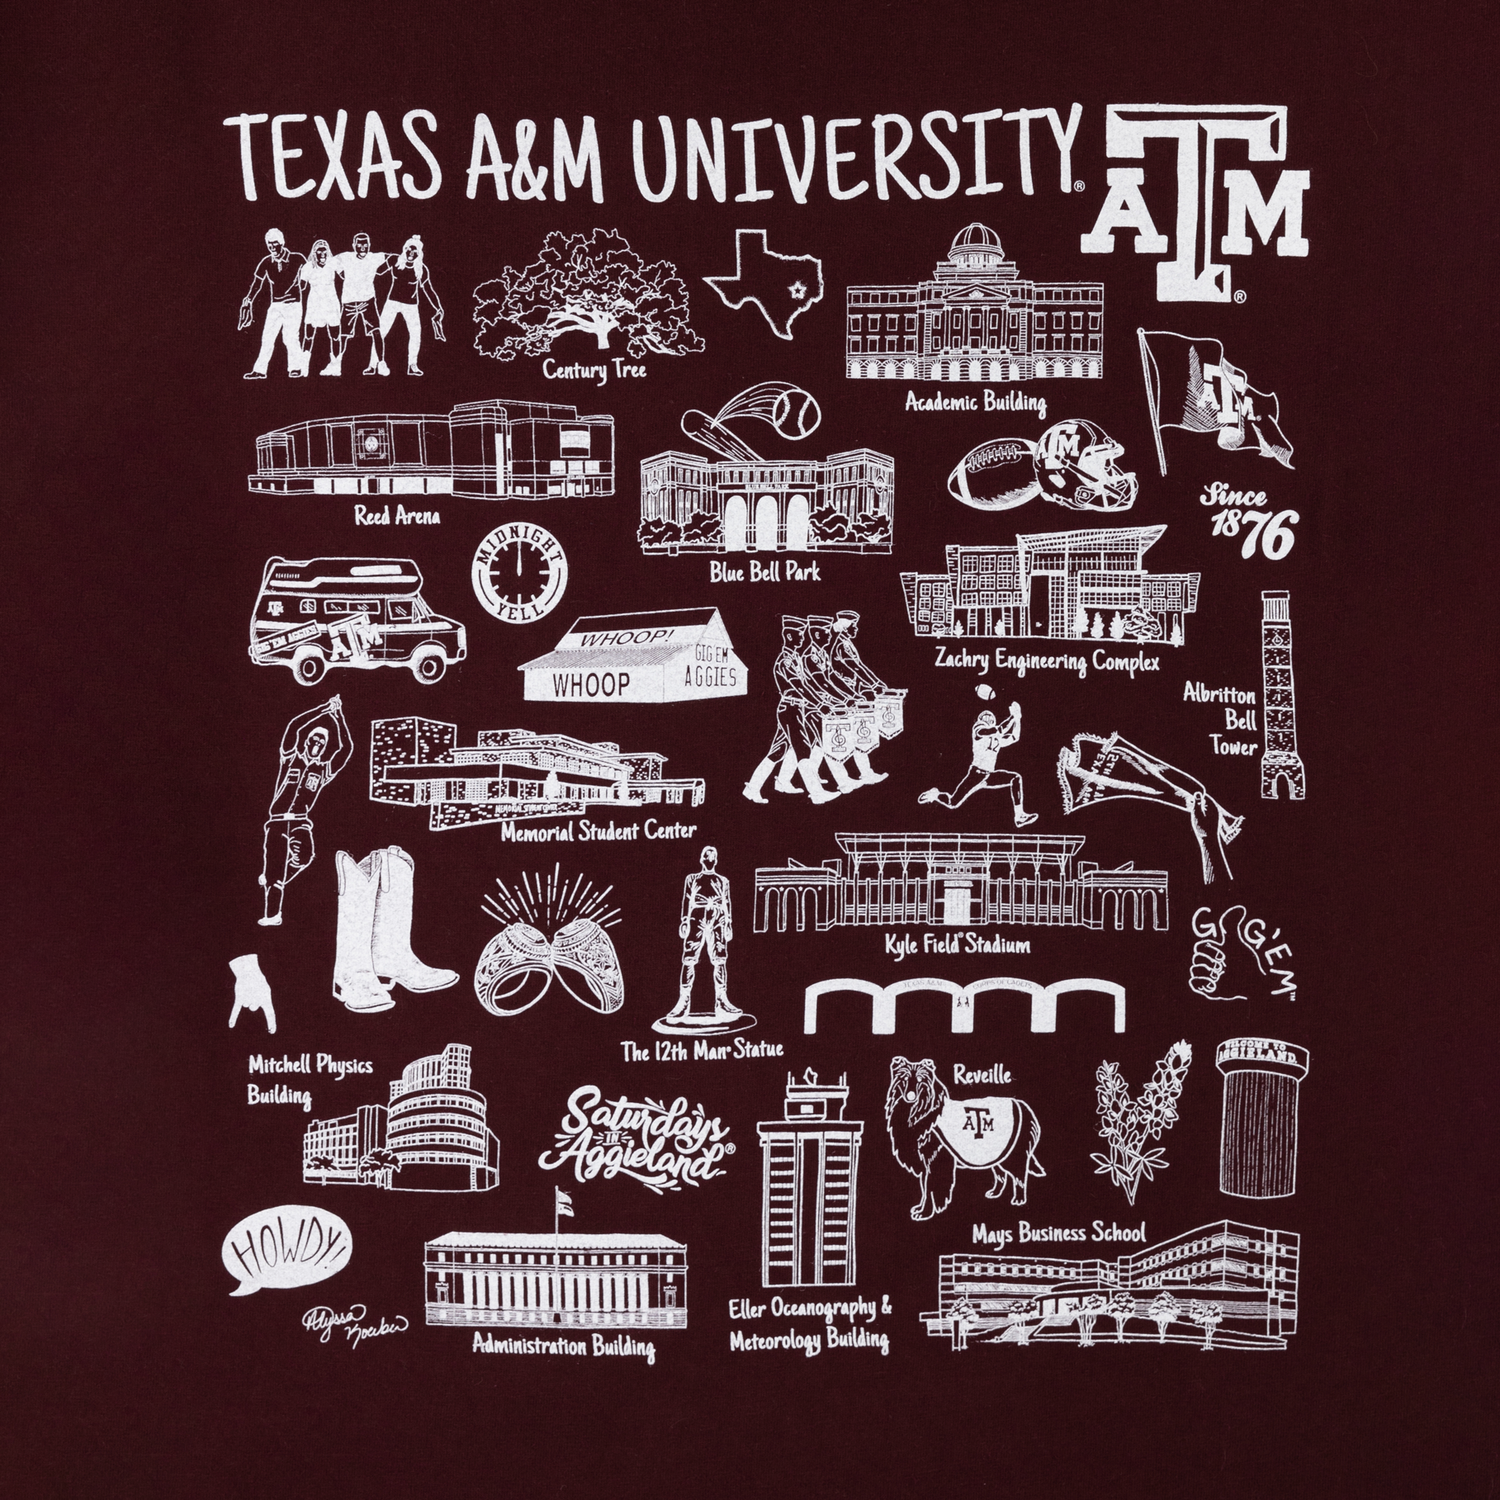 Texas A&M University Traditions T-Shirt